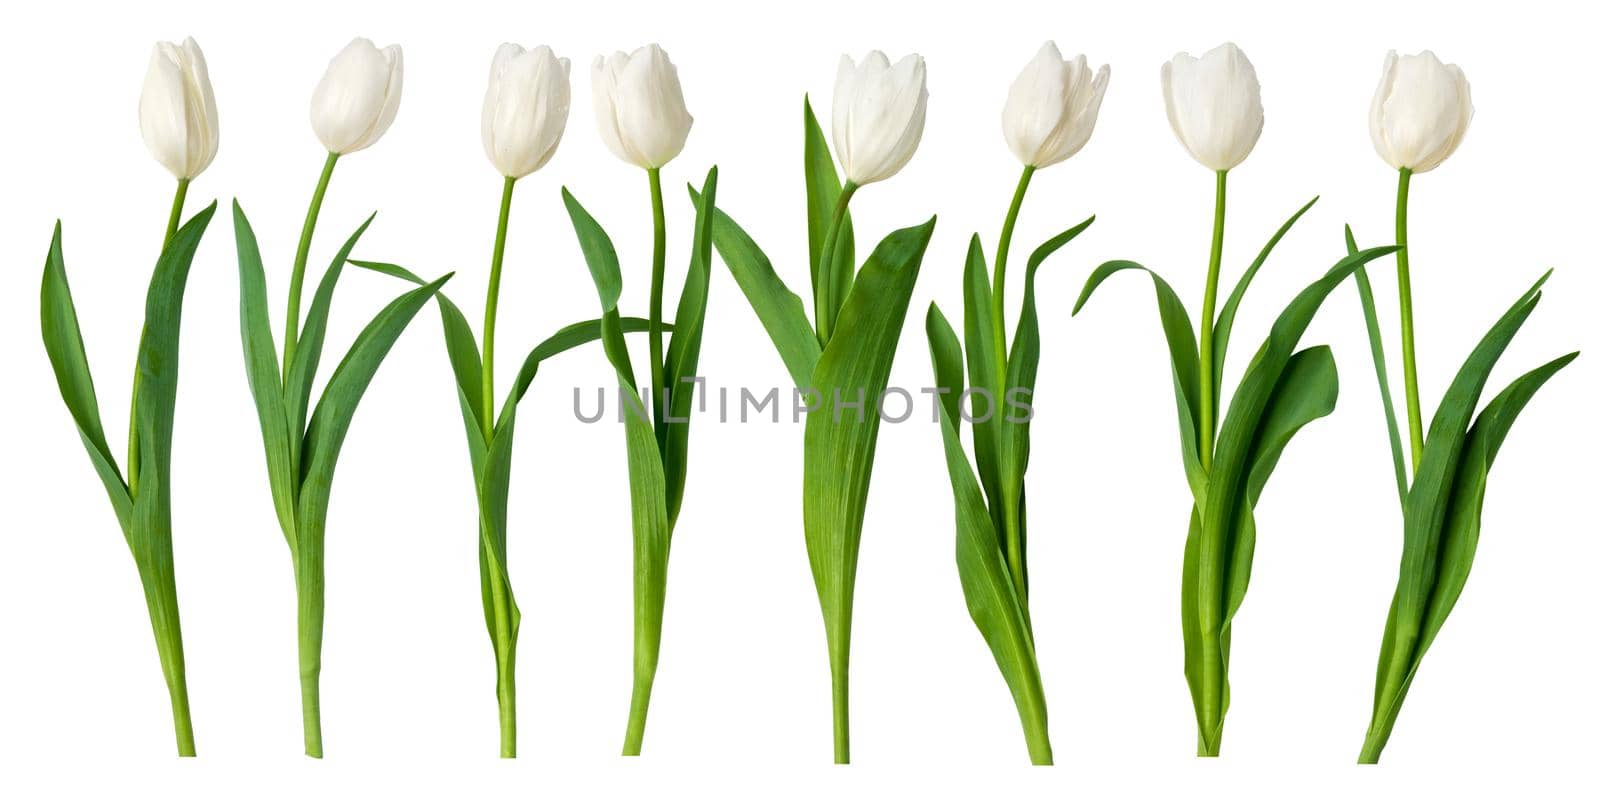  white tulips by kornienko